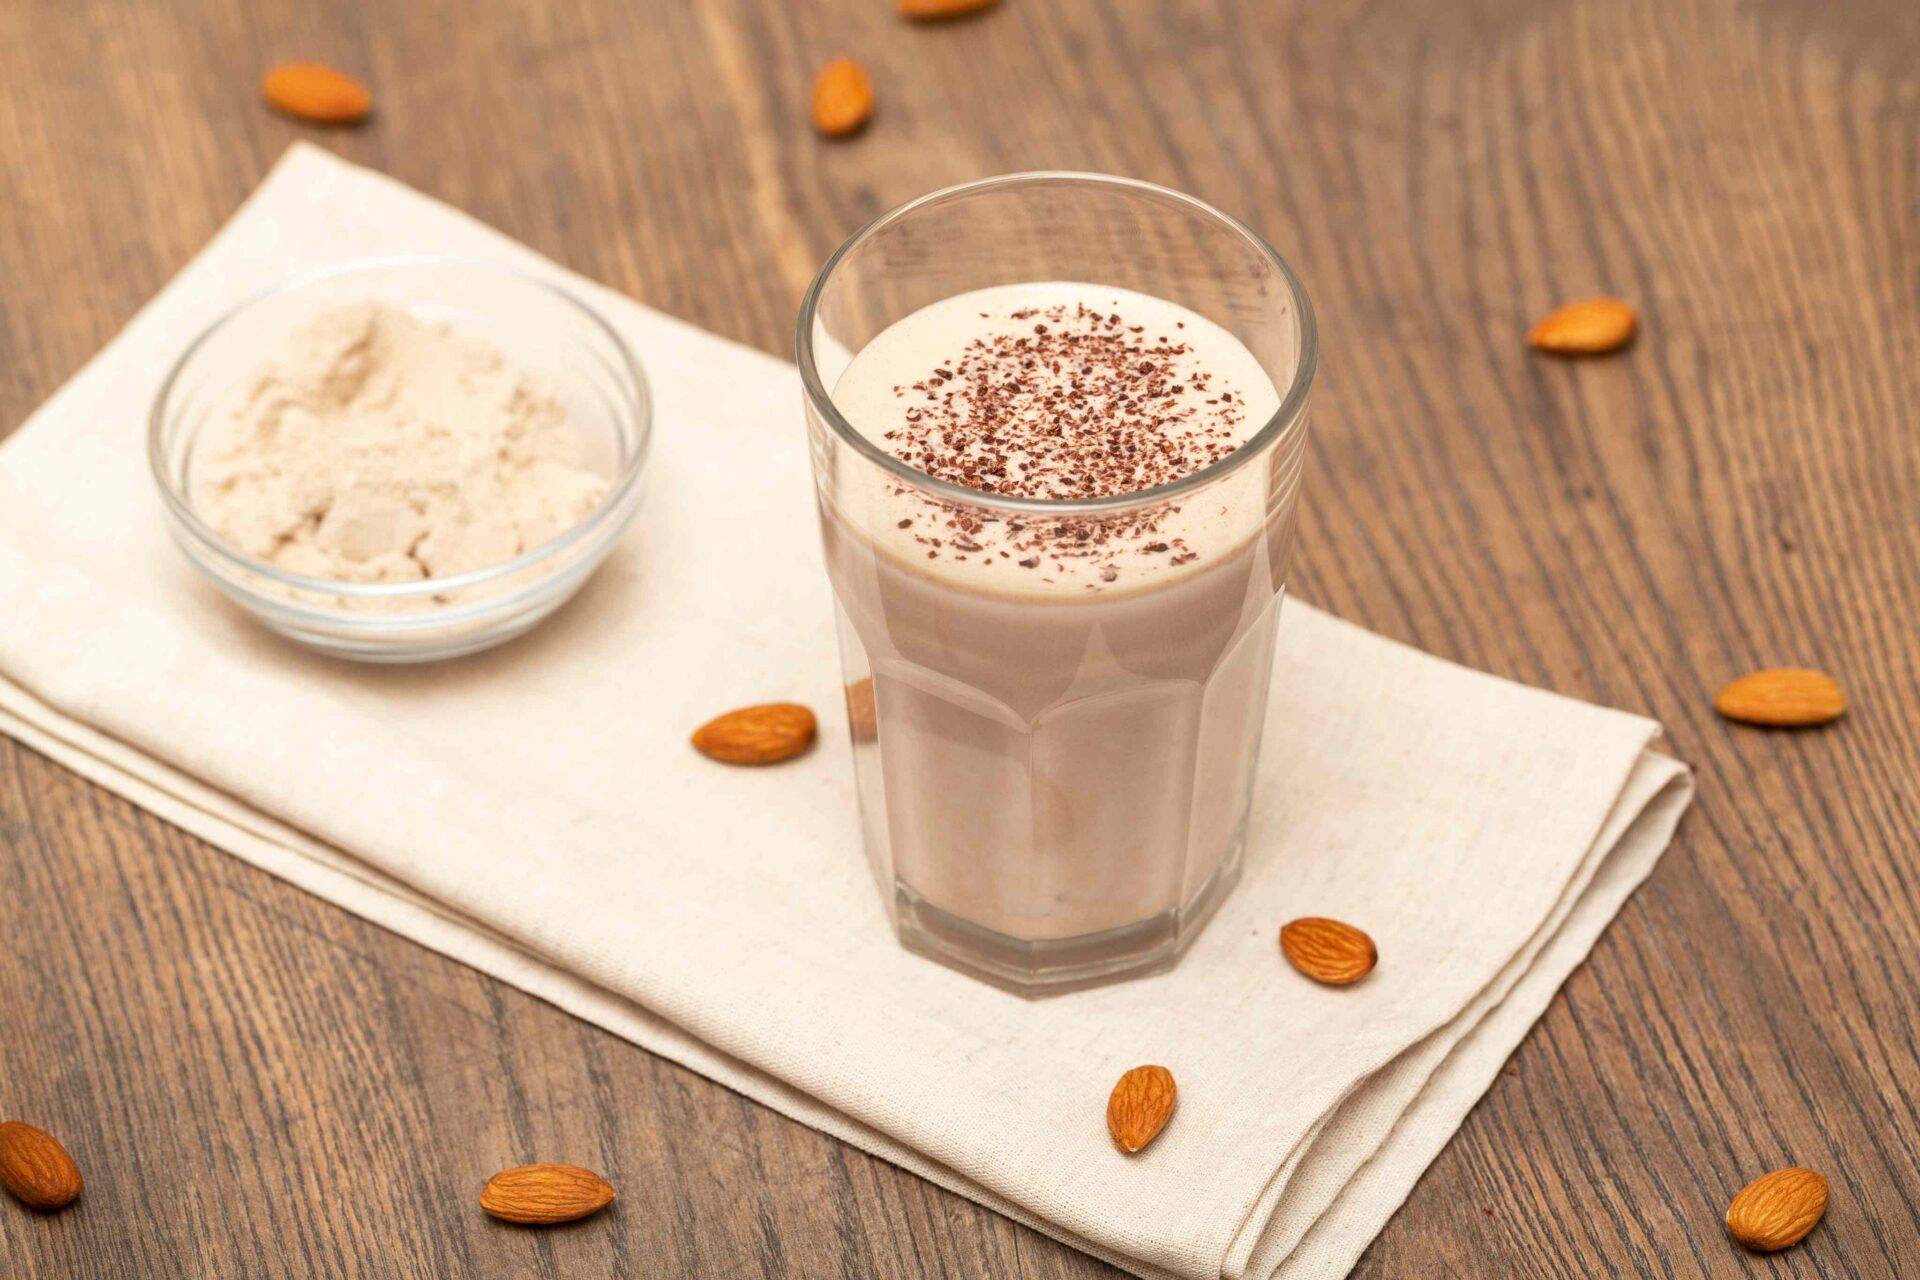 A Bowl of Almond Protein Powder next to a Glass of a Protein Shake - Protein Shakes and Smoothies